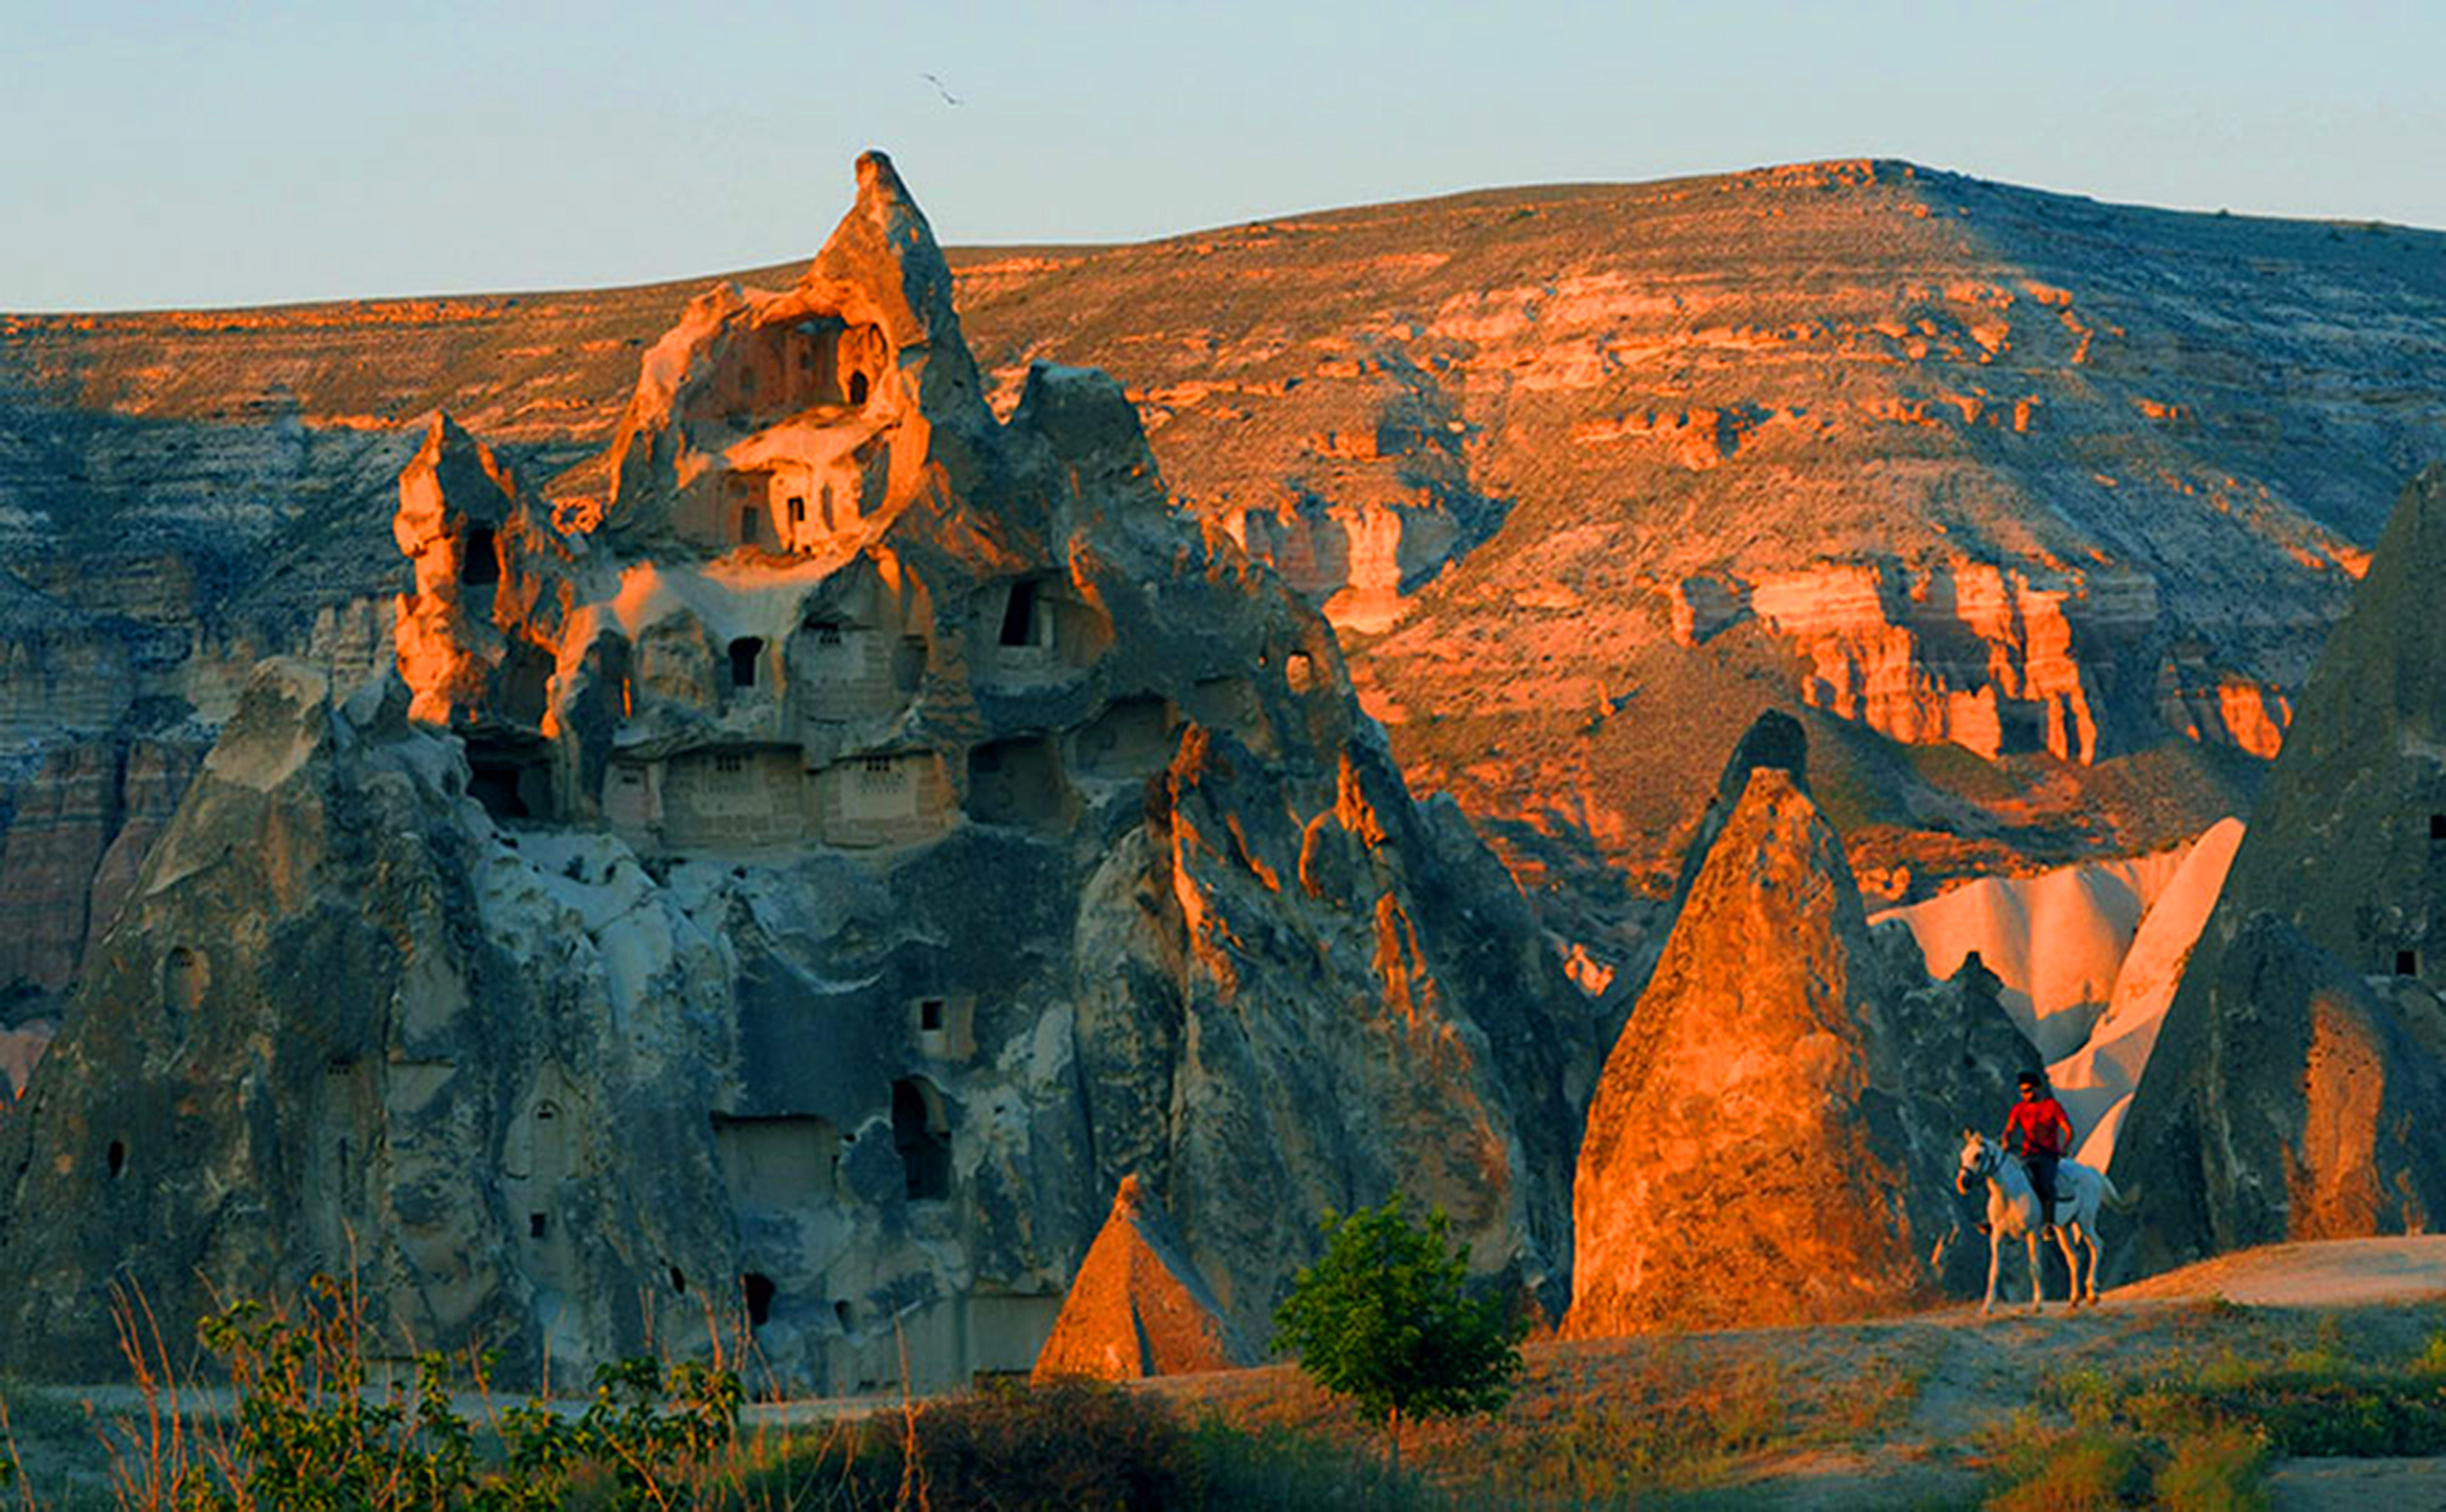 Cappadocian landscape at sundown (photo: Sugato Mukherjee)